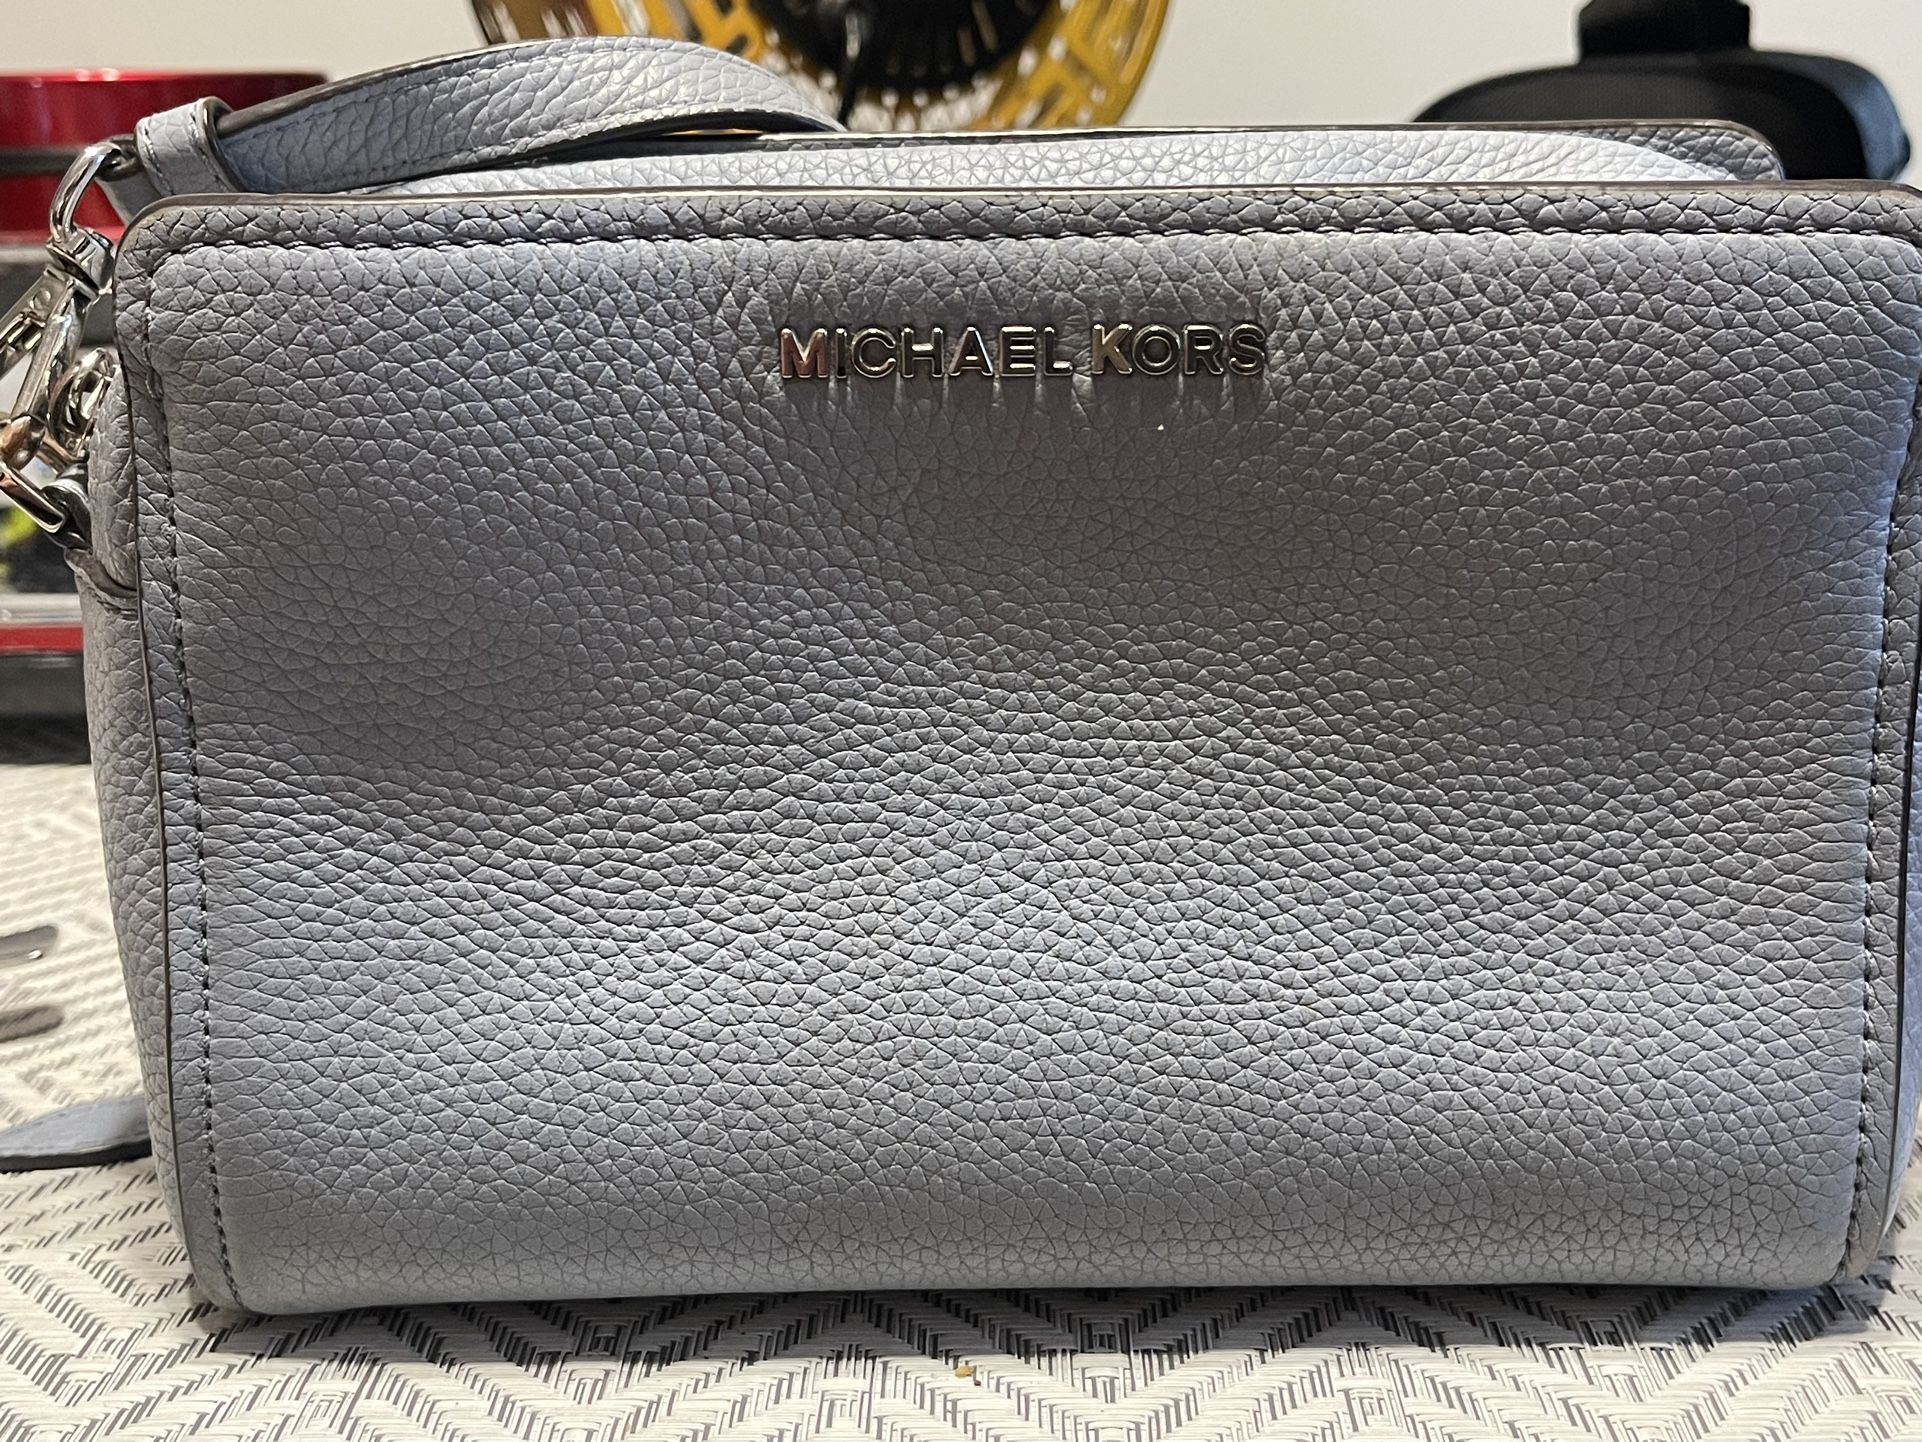 Michael Kors leather Crossbody bag